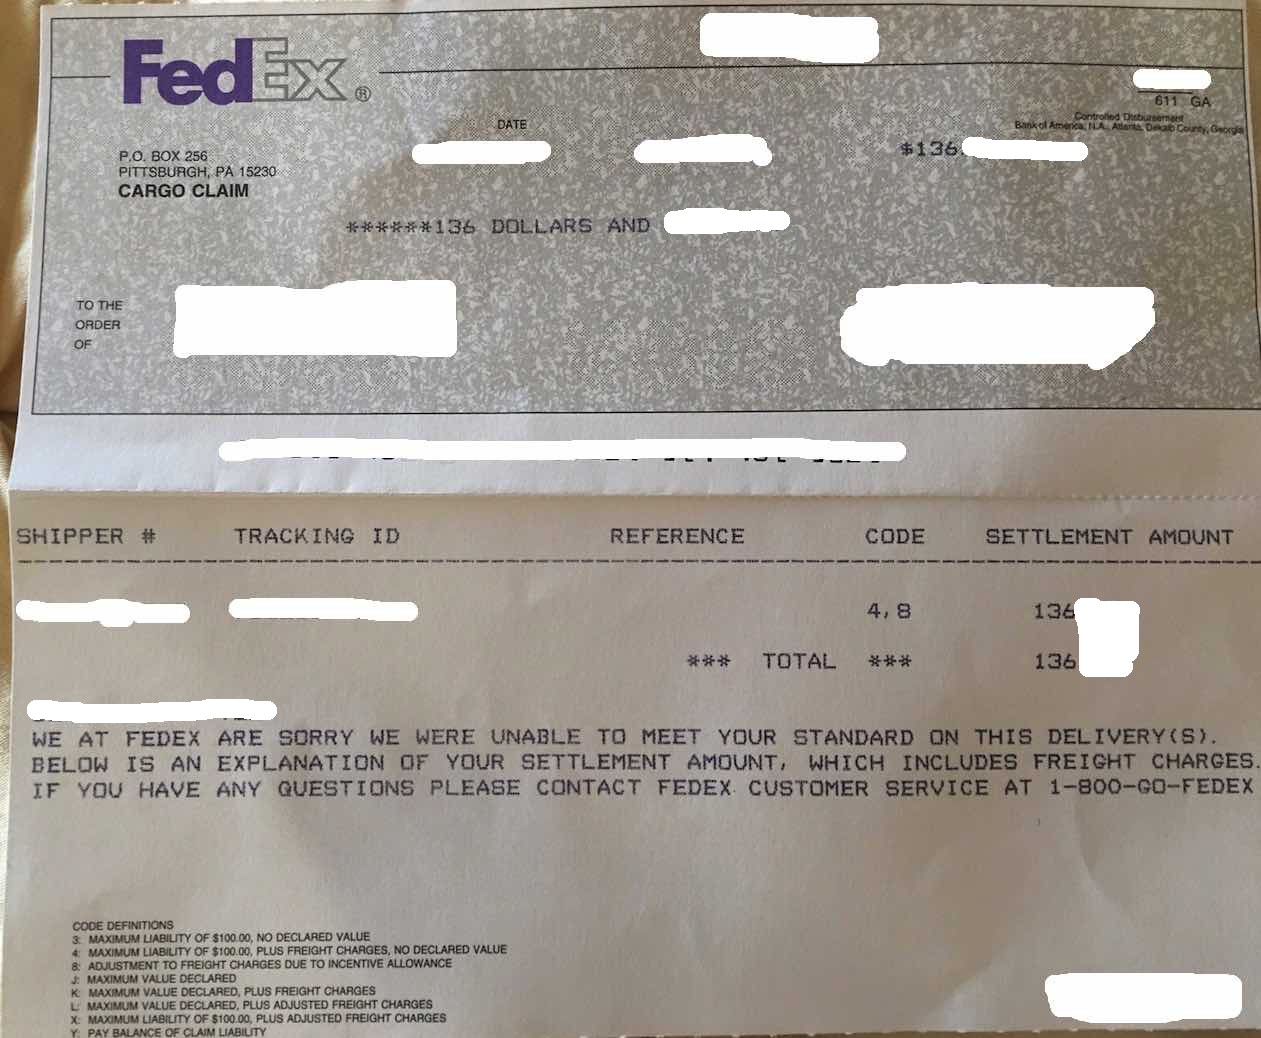 Where to Check FedEx Claim Status